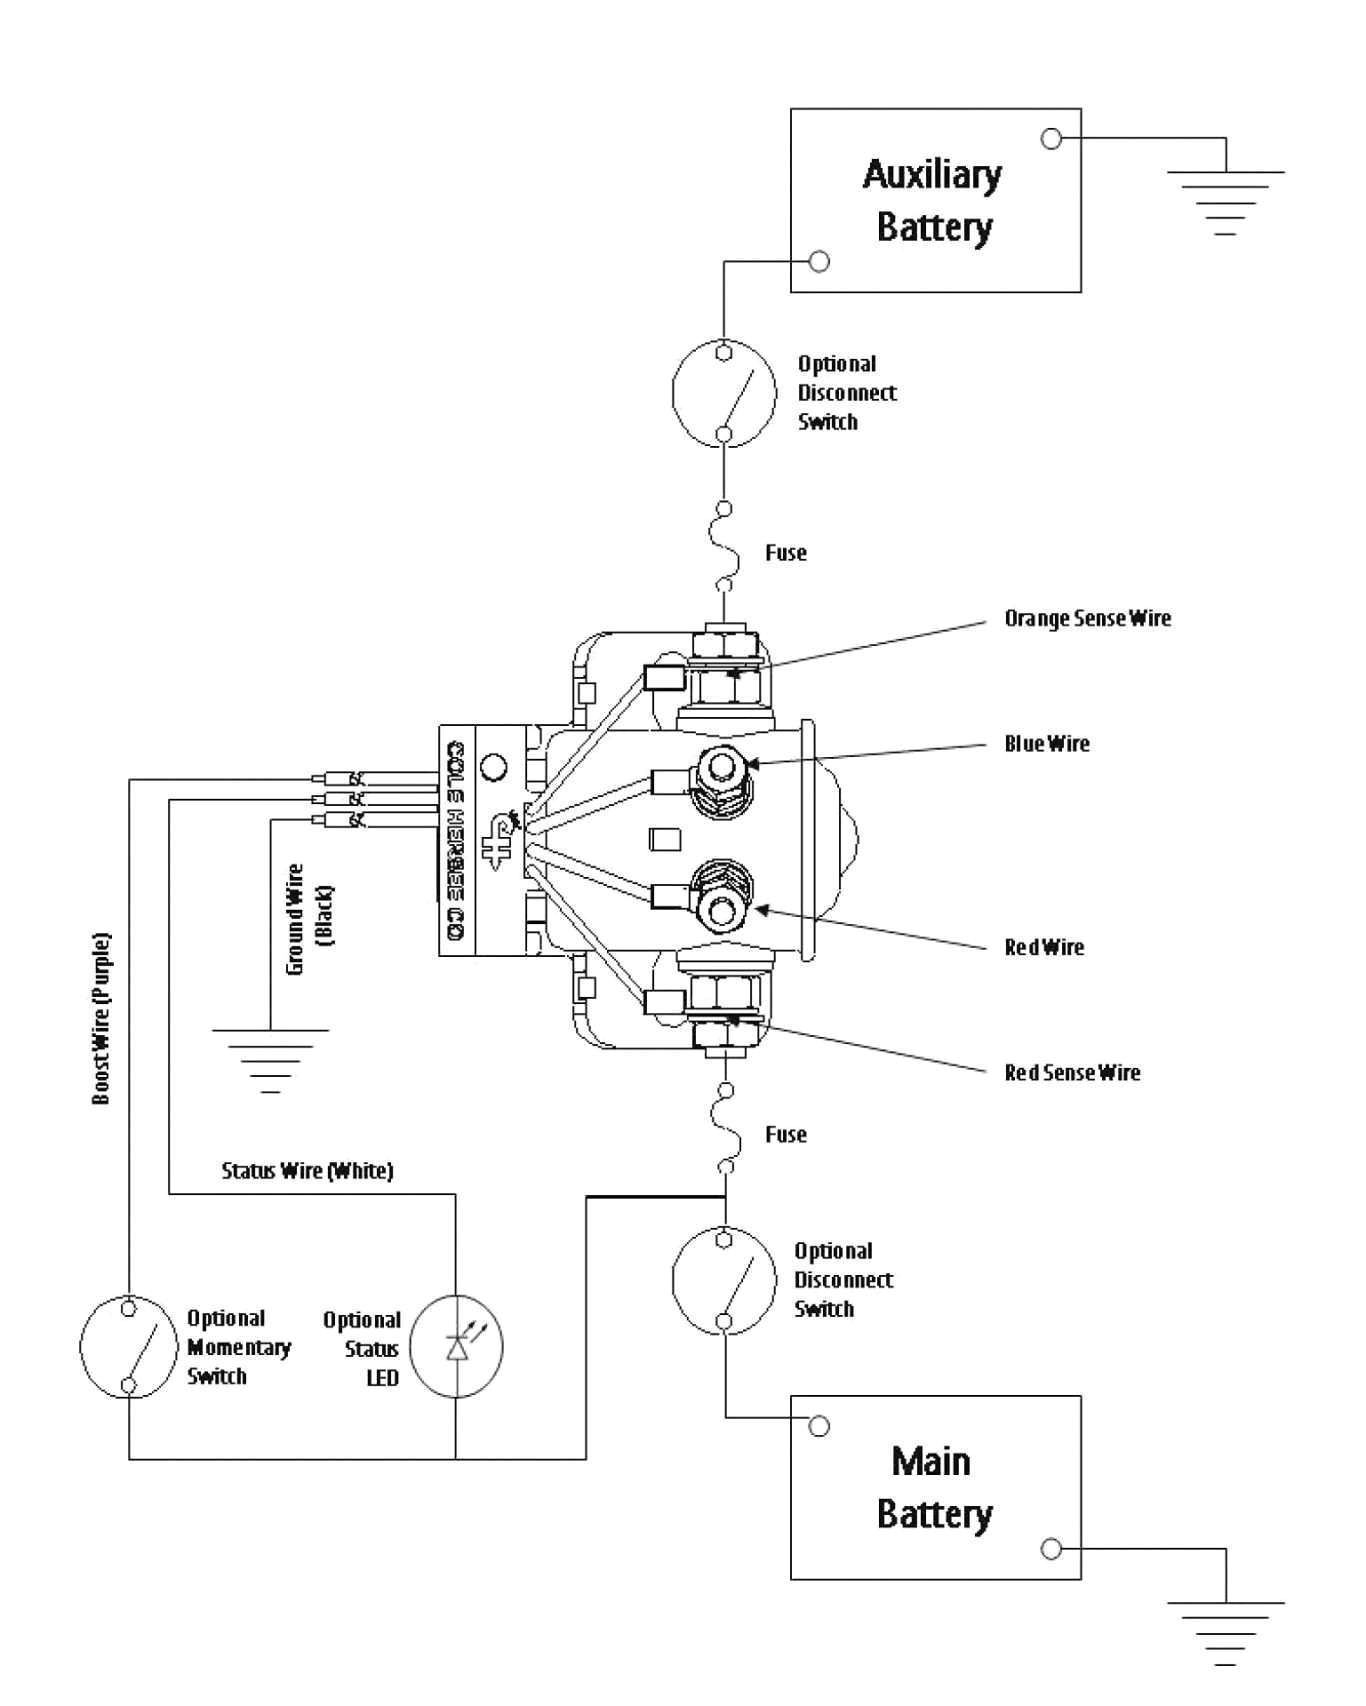 factory wiring diagrams car audio elegant isolator car audio wiring diagrams library wiring diagrams